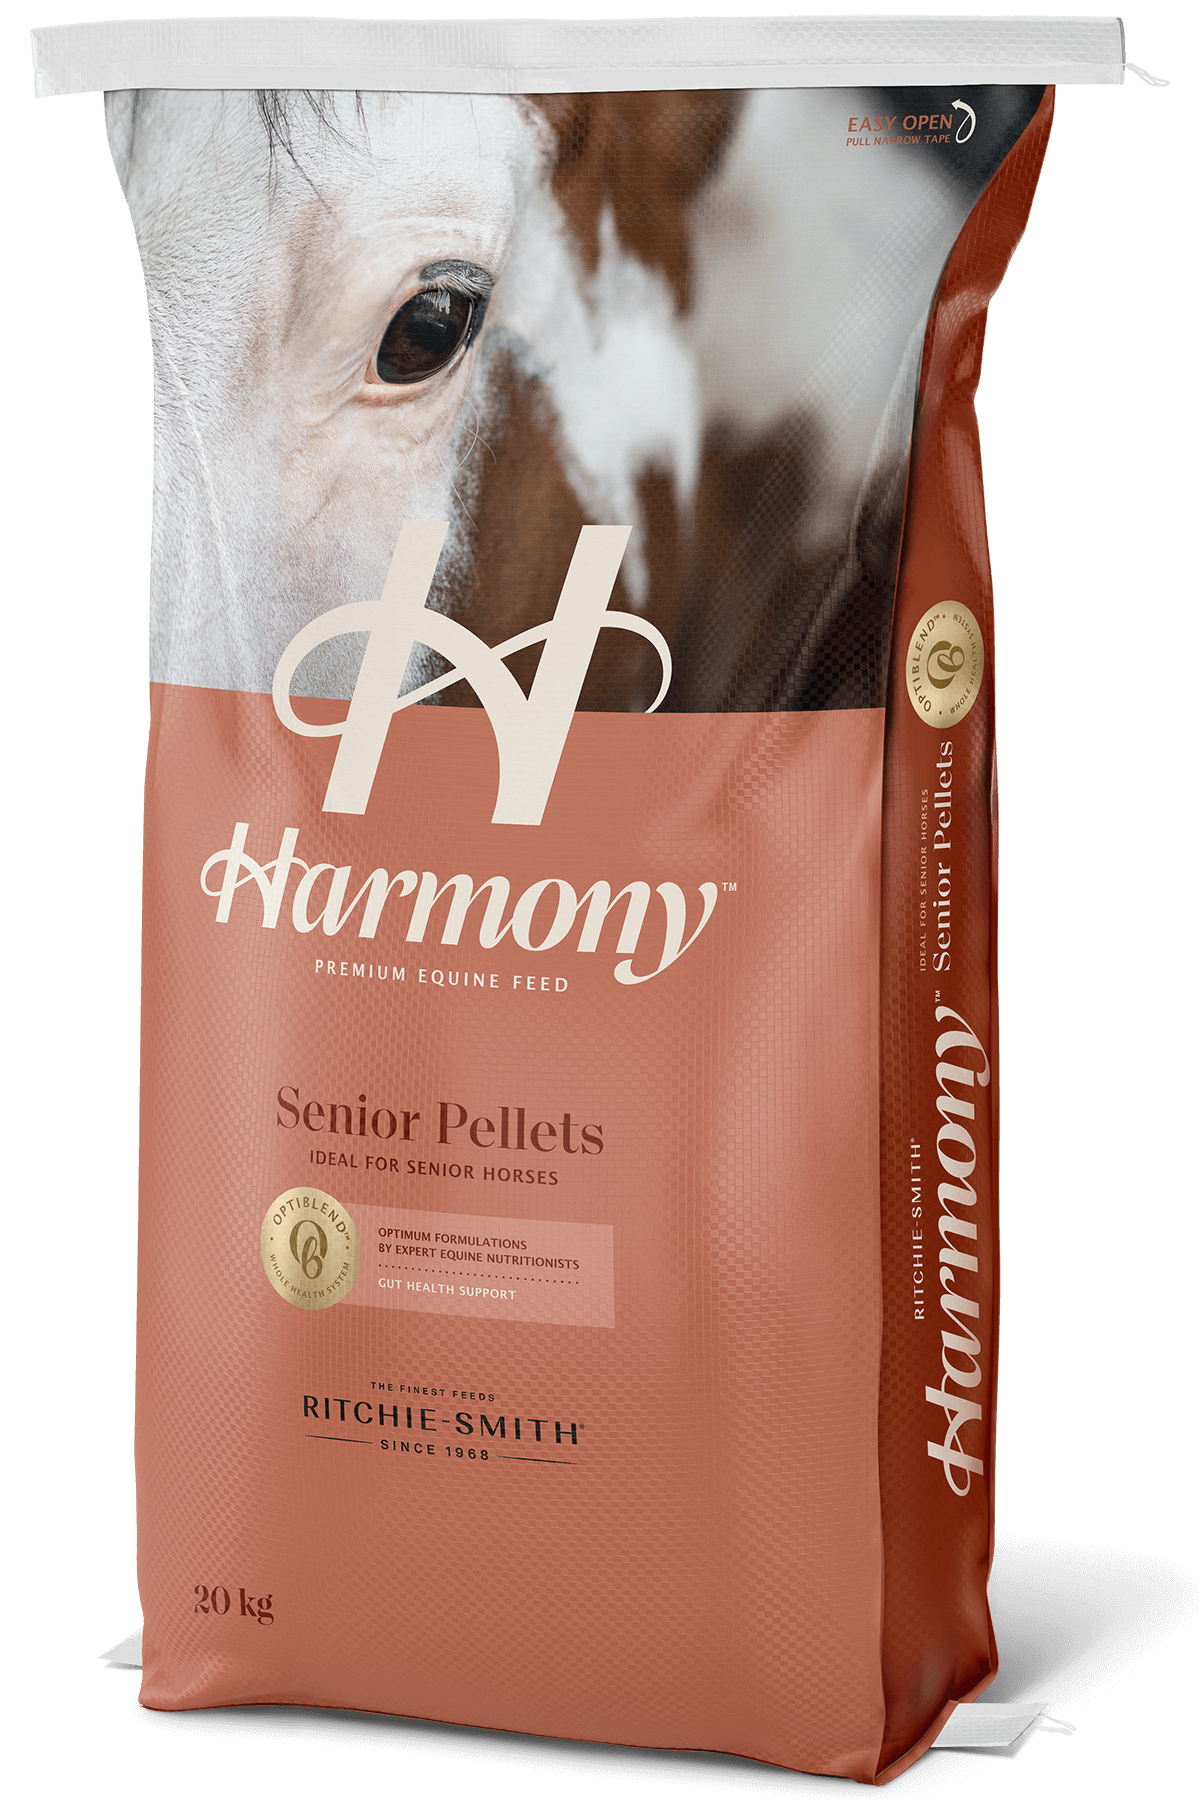 Senior Horse Pellets by Harmony Premium Equine Feeds